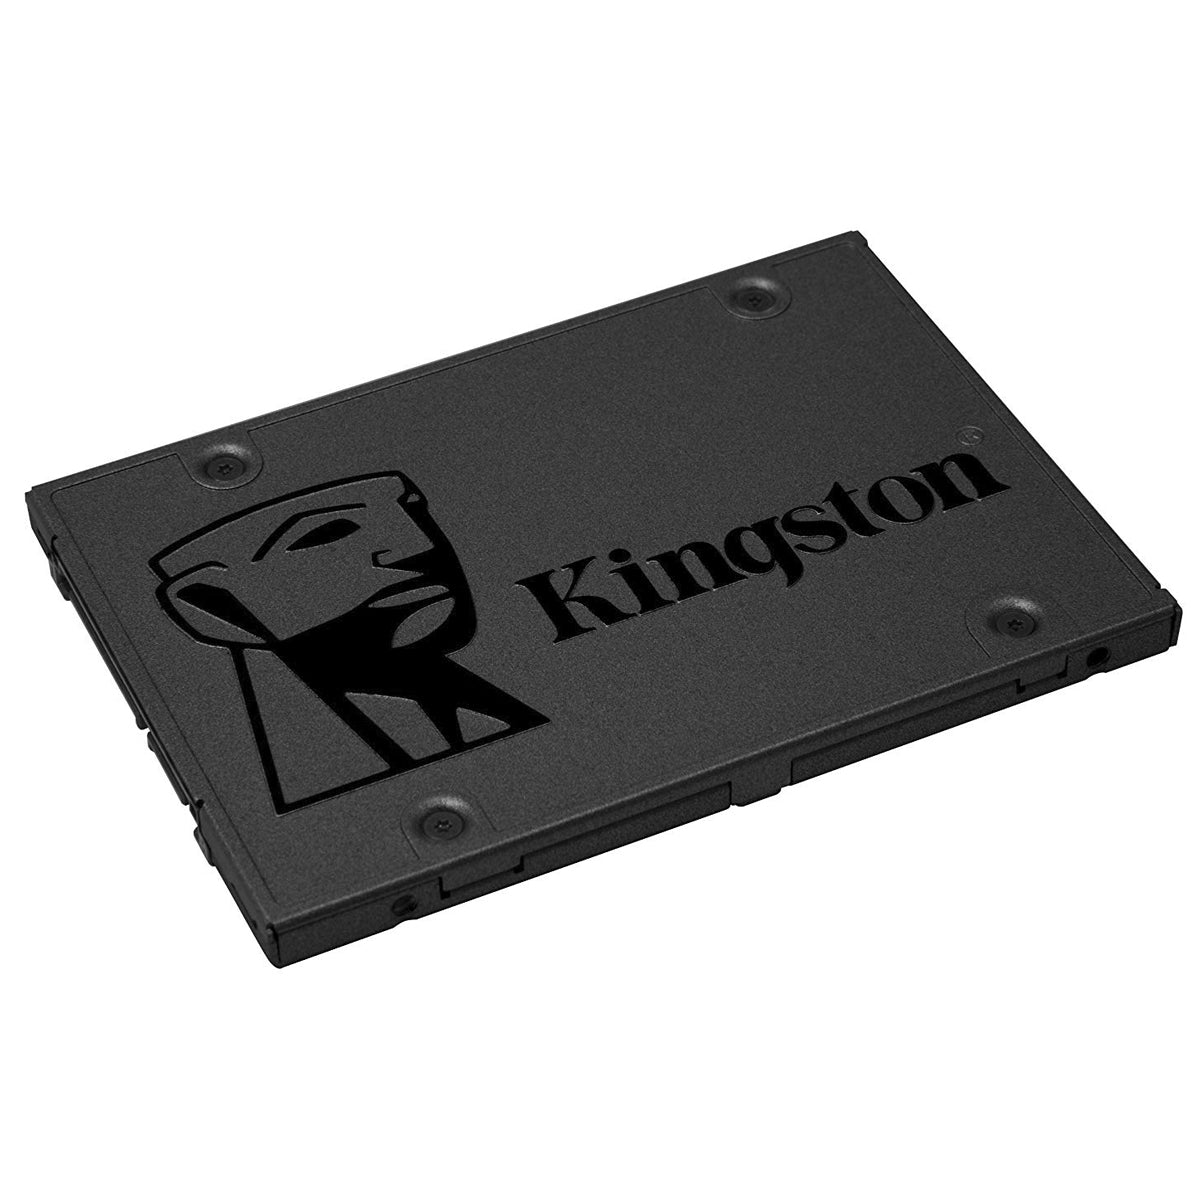 Kingston 480GB A400 Sata III 2.5